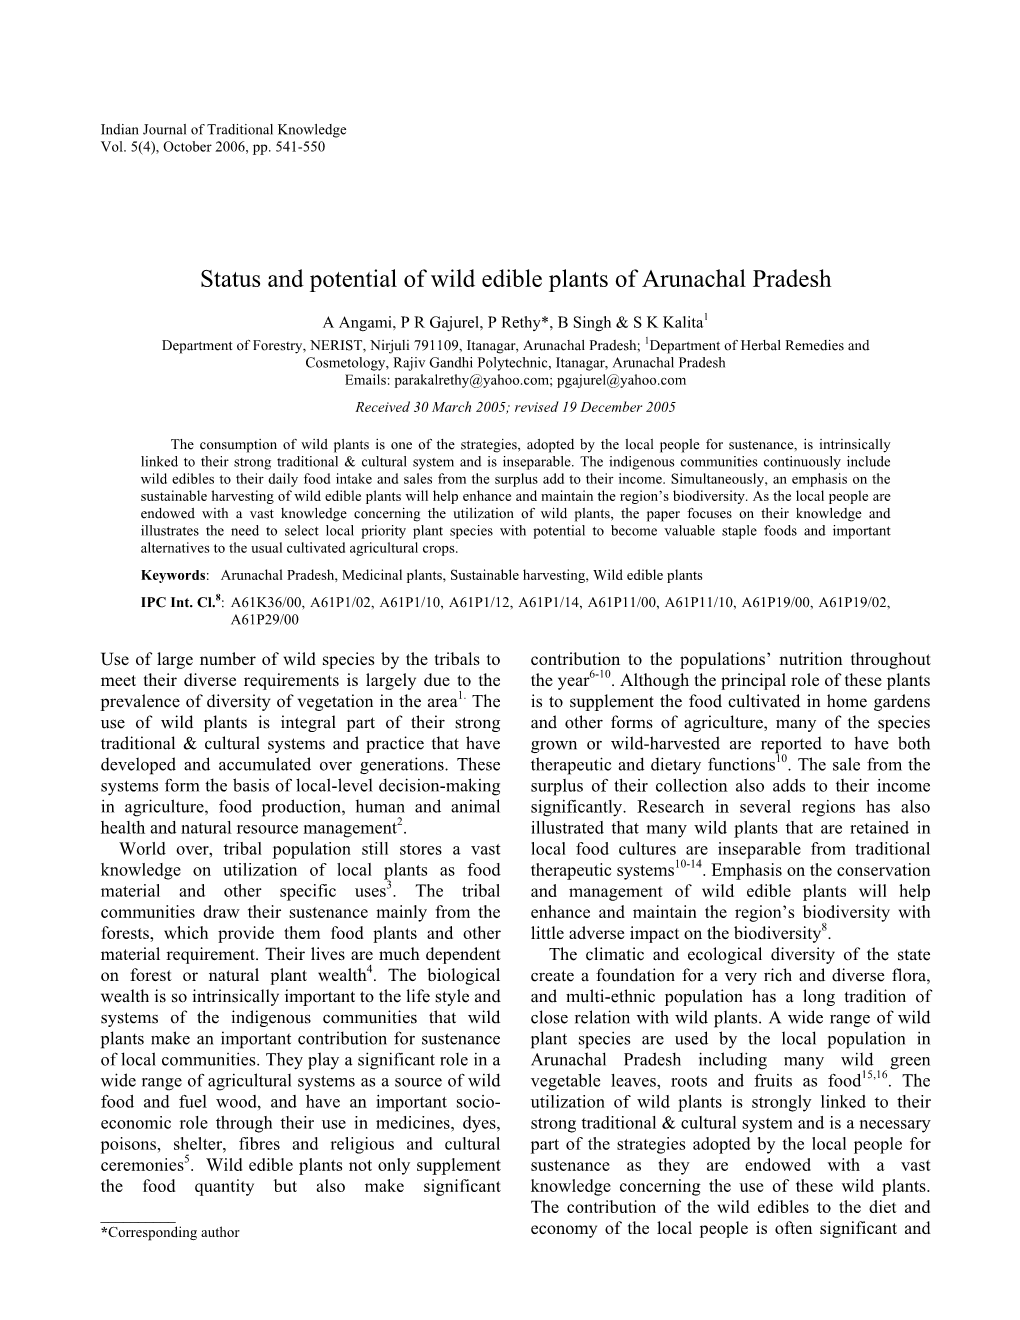 Status and Potential of Wild Edible Plants of Arunachal Pradesh